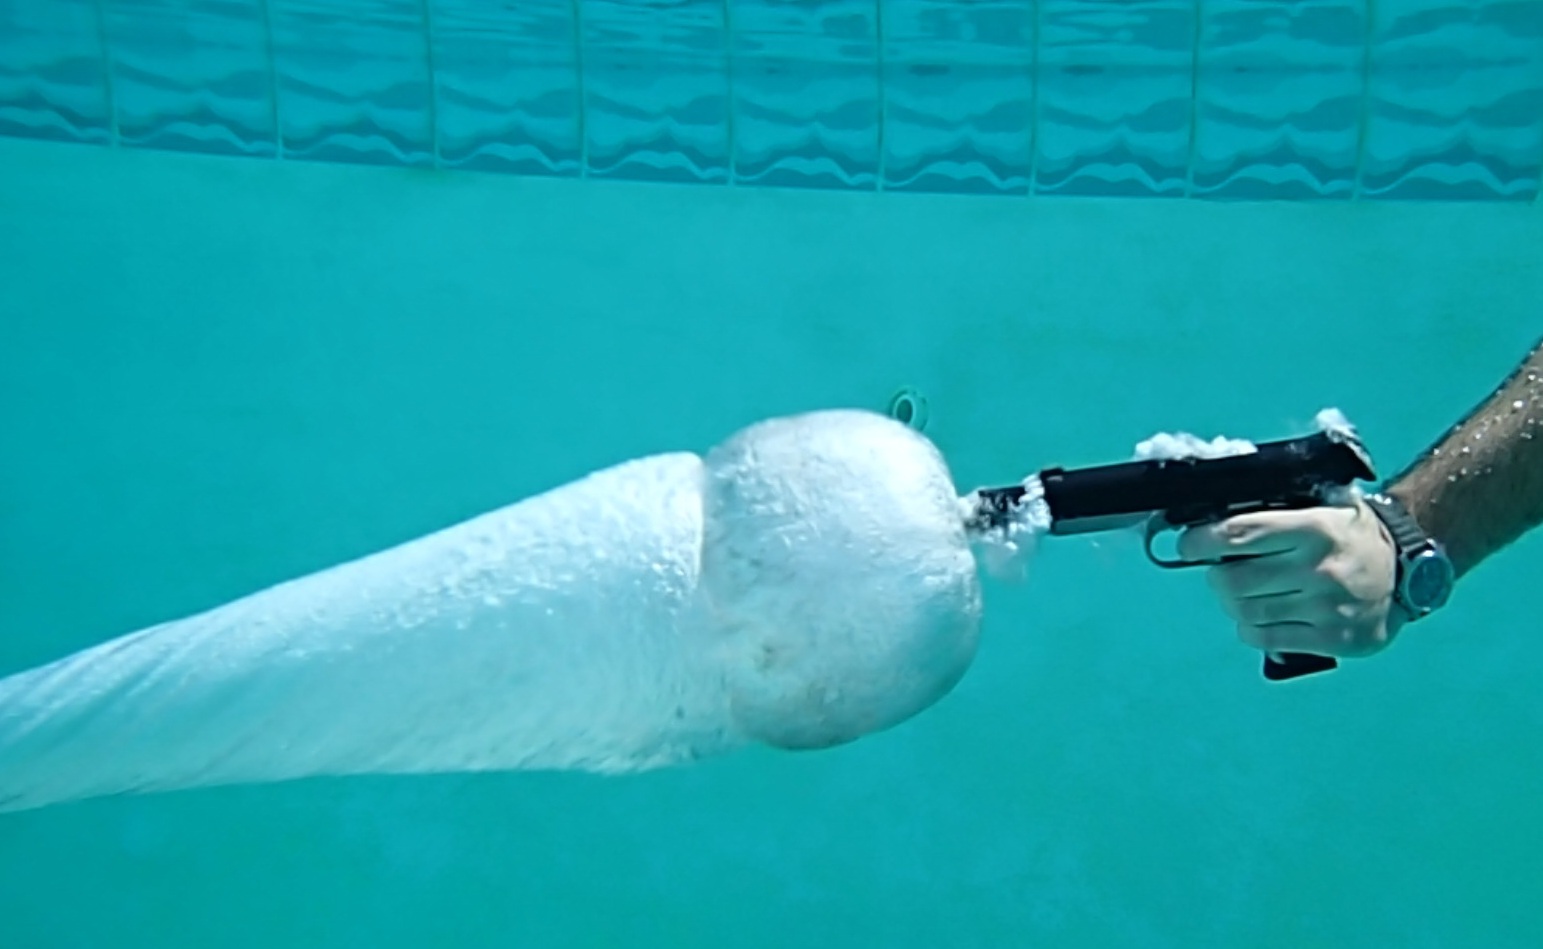 shooting a gun underwater